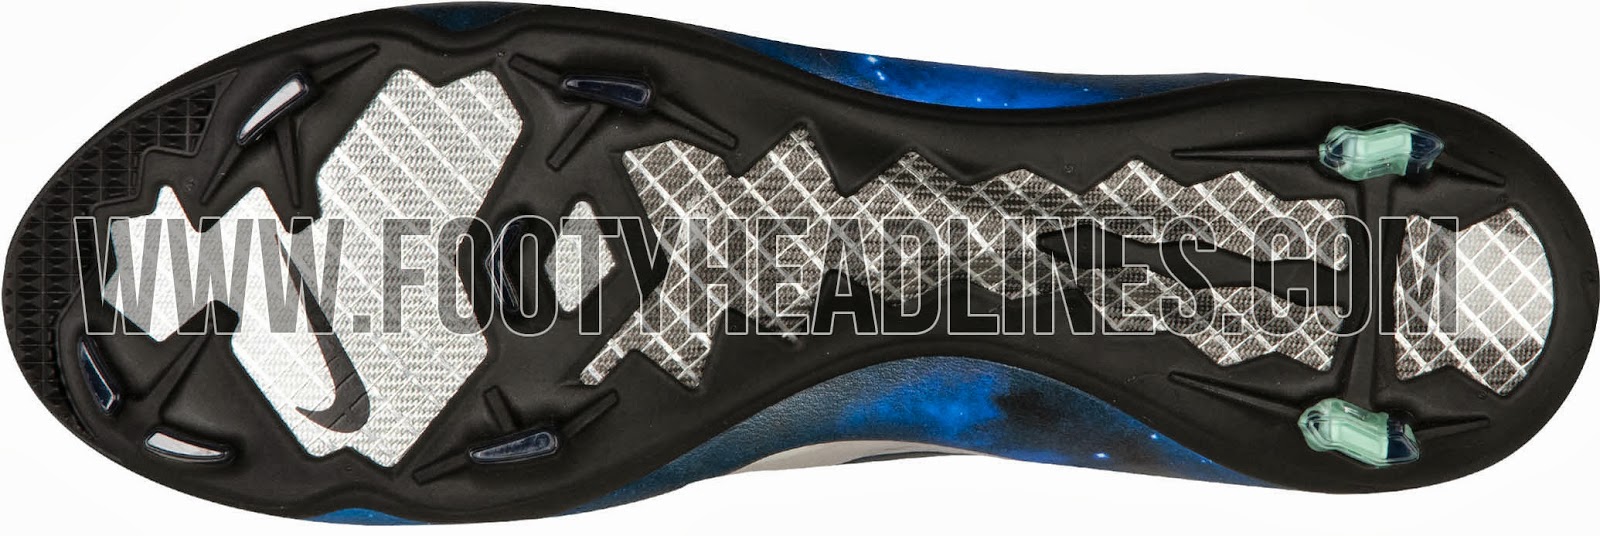 Nike Mercurial Vapor IX CR7 SG Pro Soccer Cleats